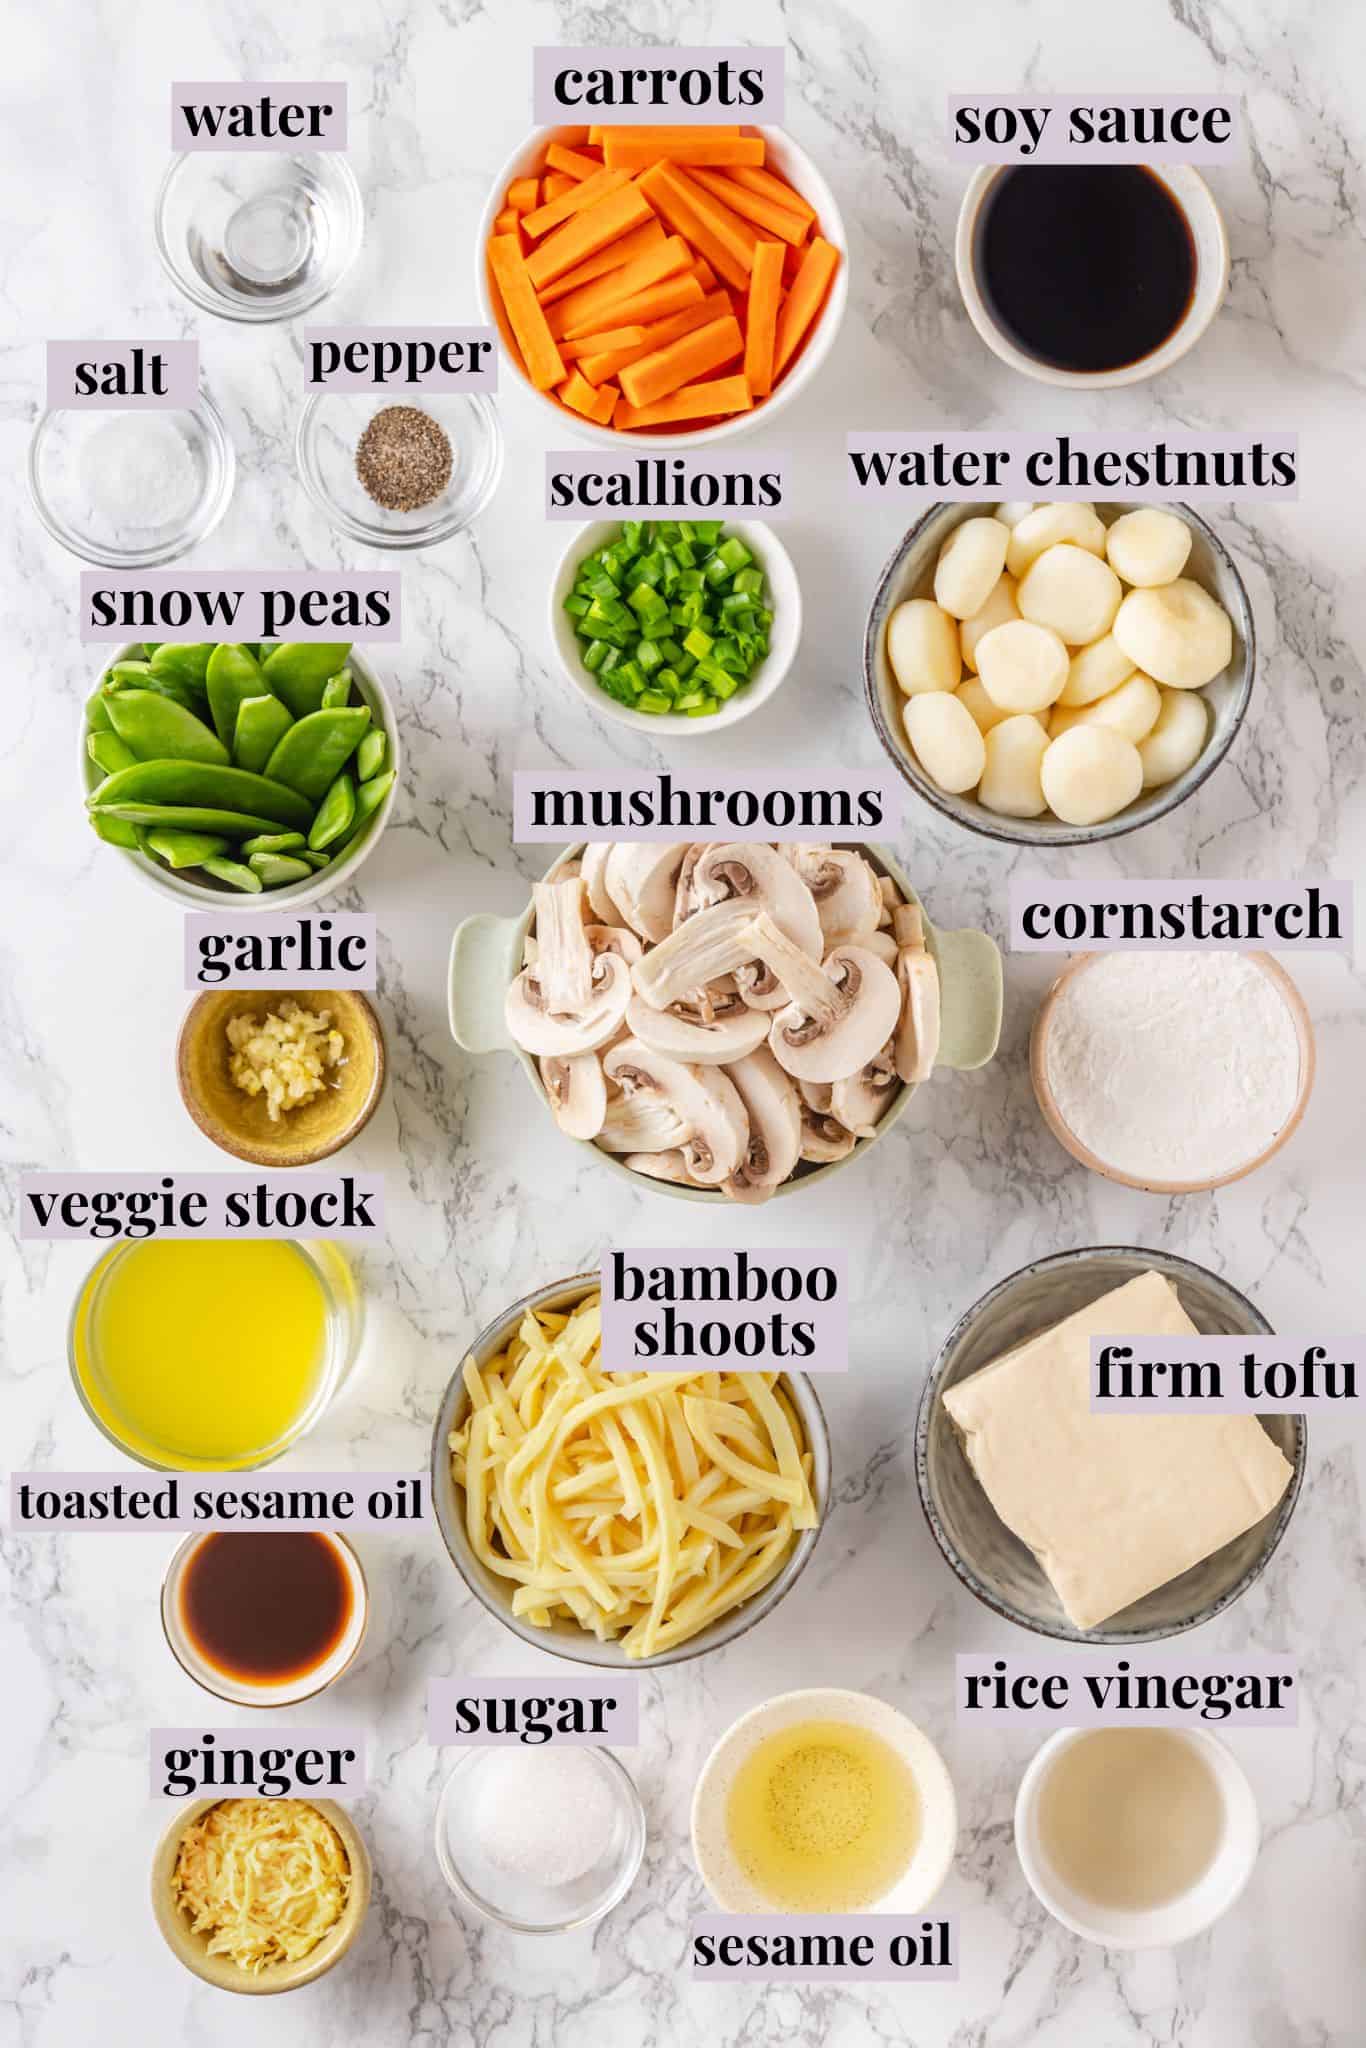 Overhead view of moo goo gai pan ingredients with labels